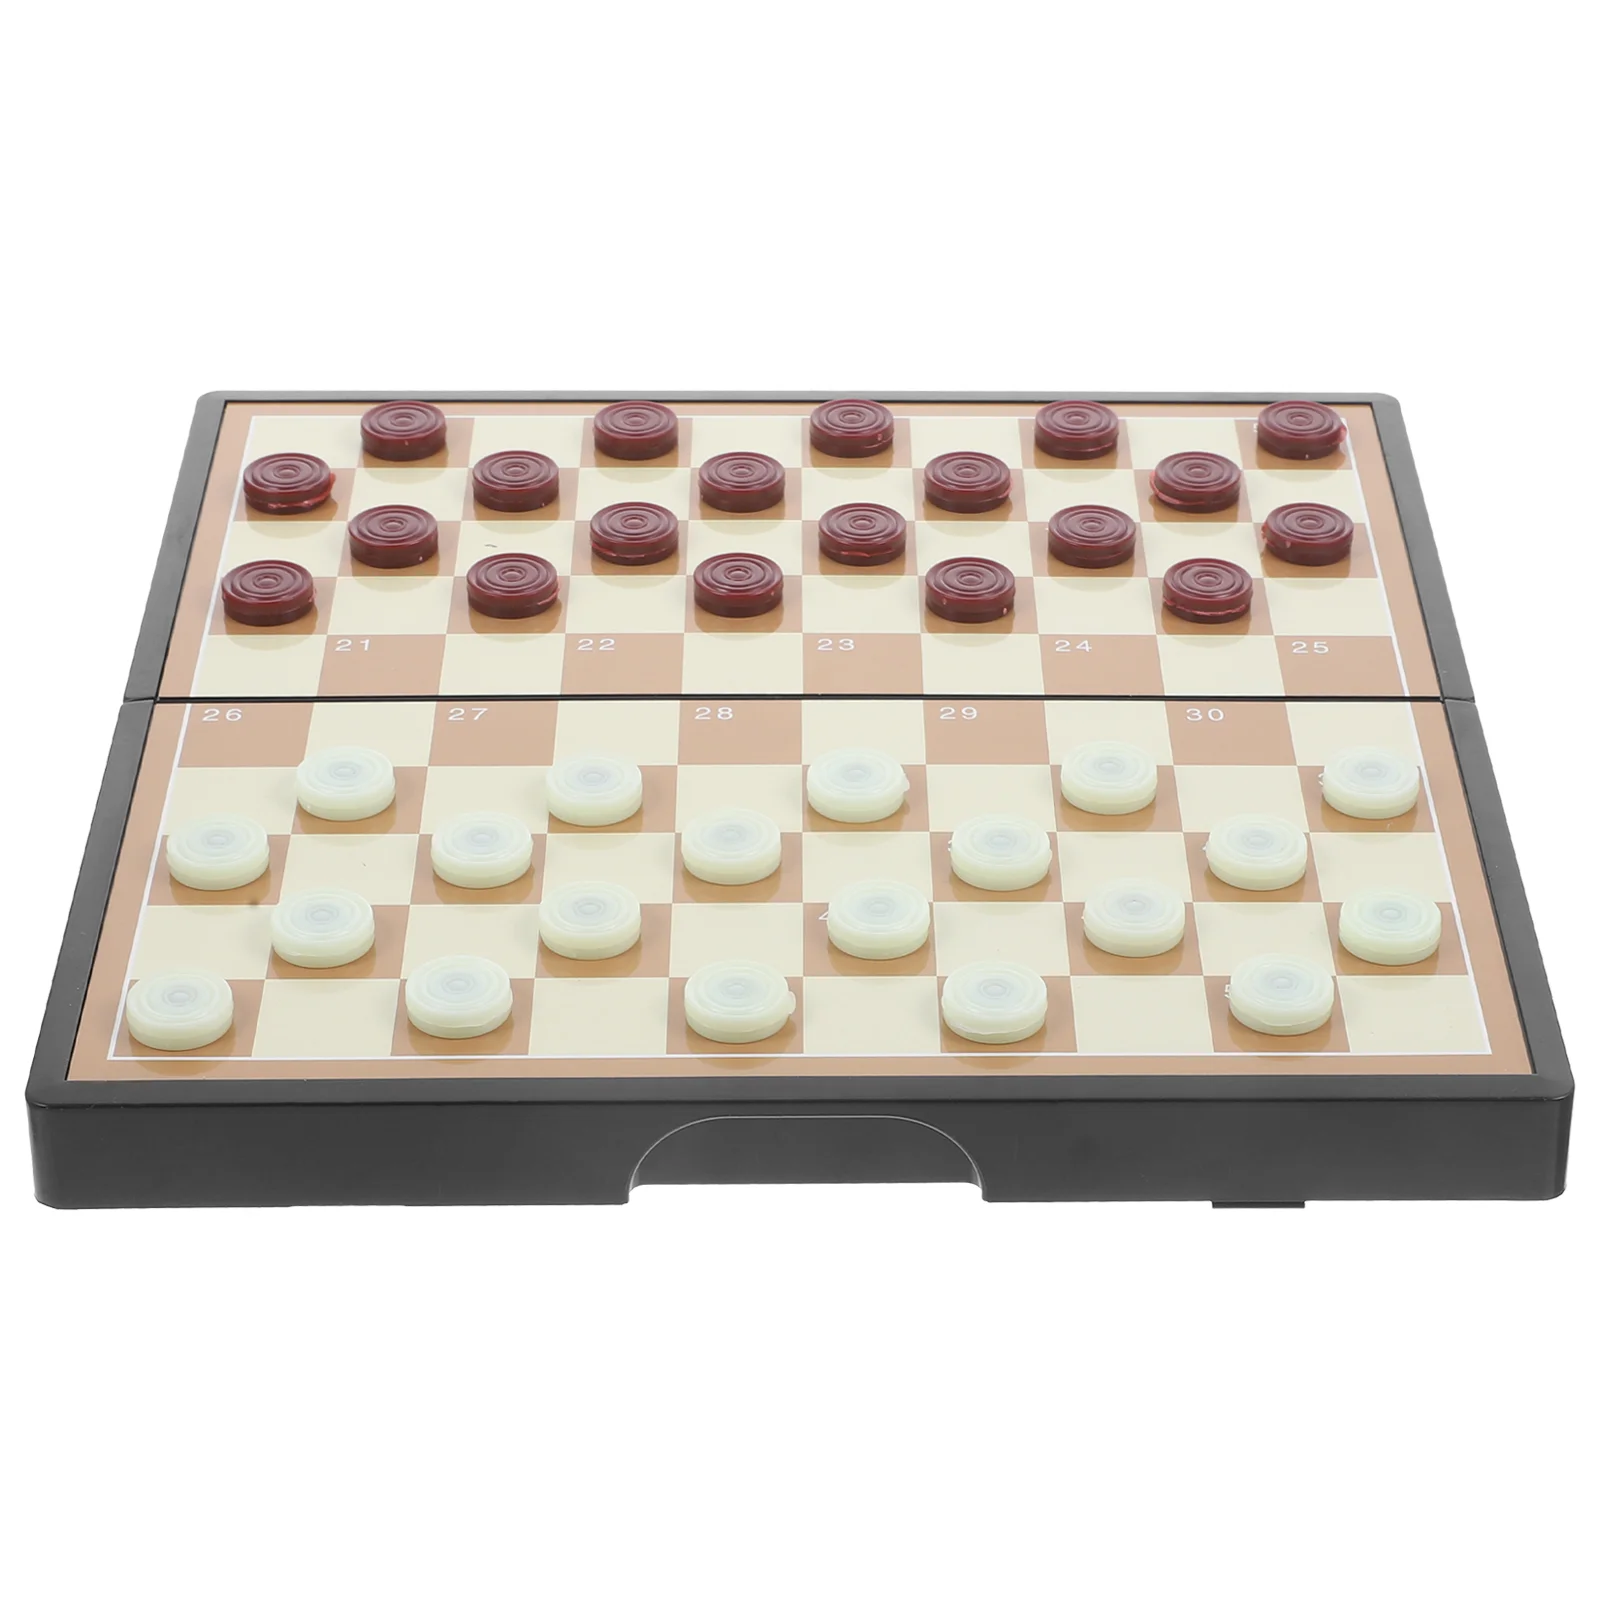 Checkers Set Board Game Board Games Kids Checkers Checkers Set For Checkers Training Set for Playing Home Children